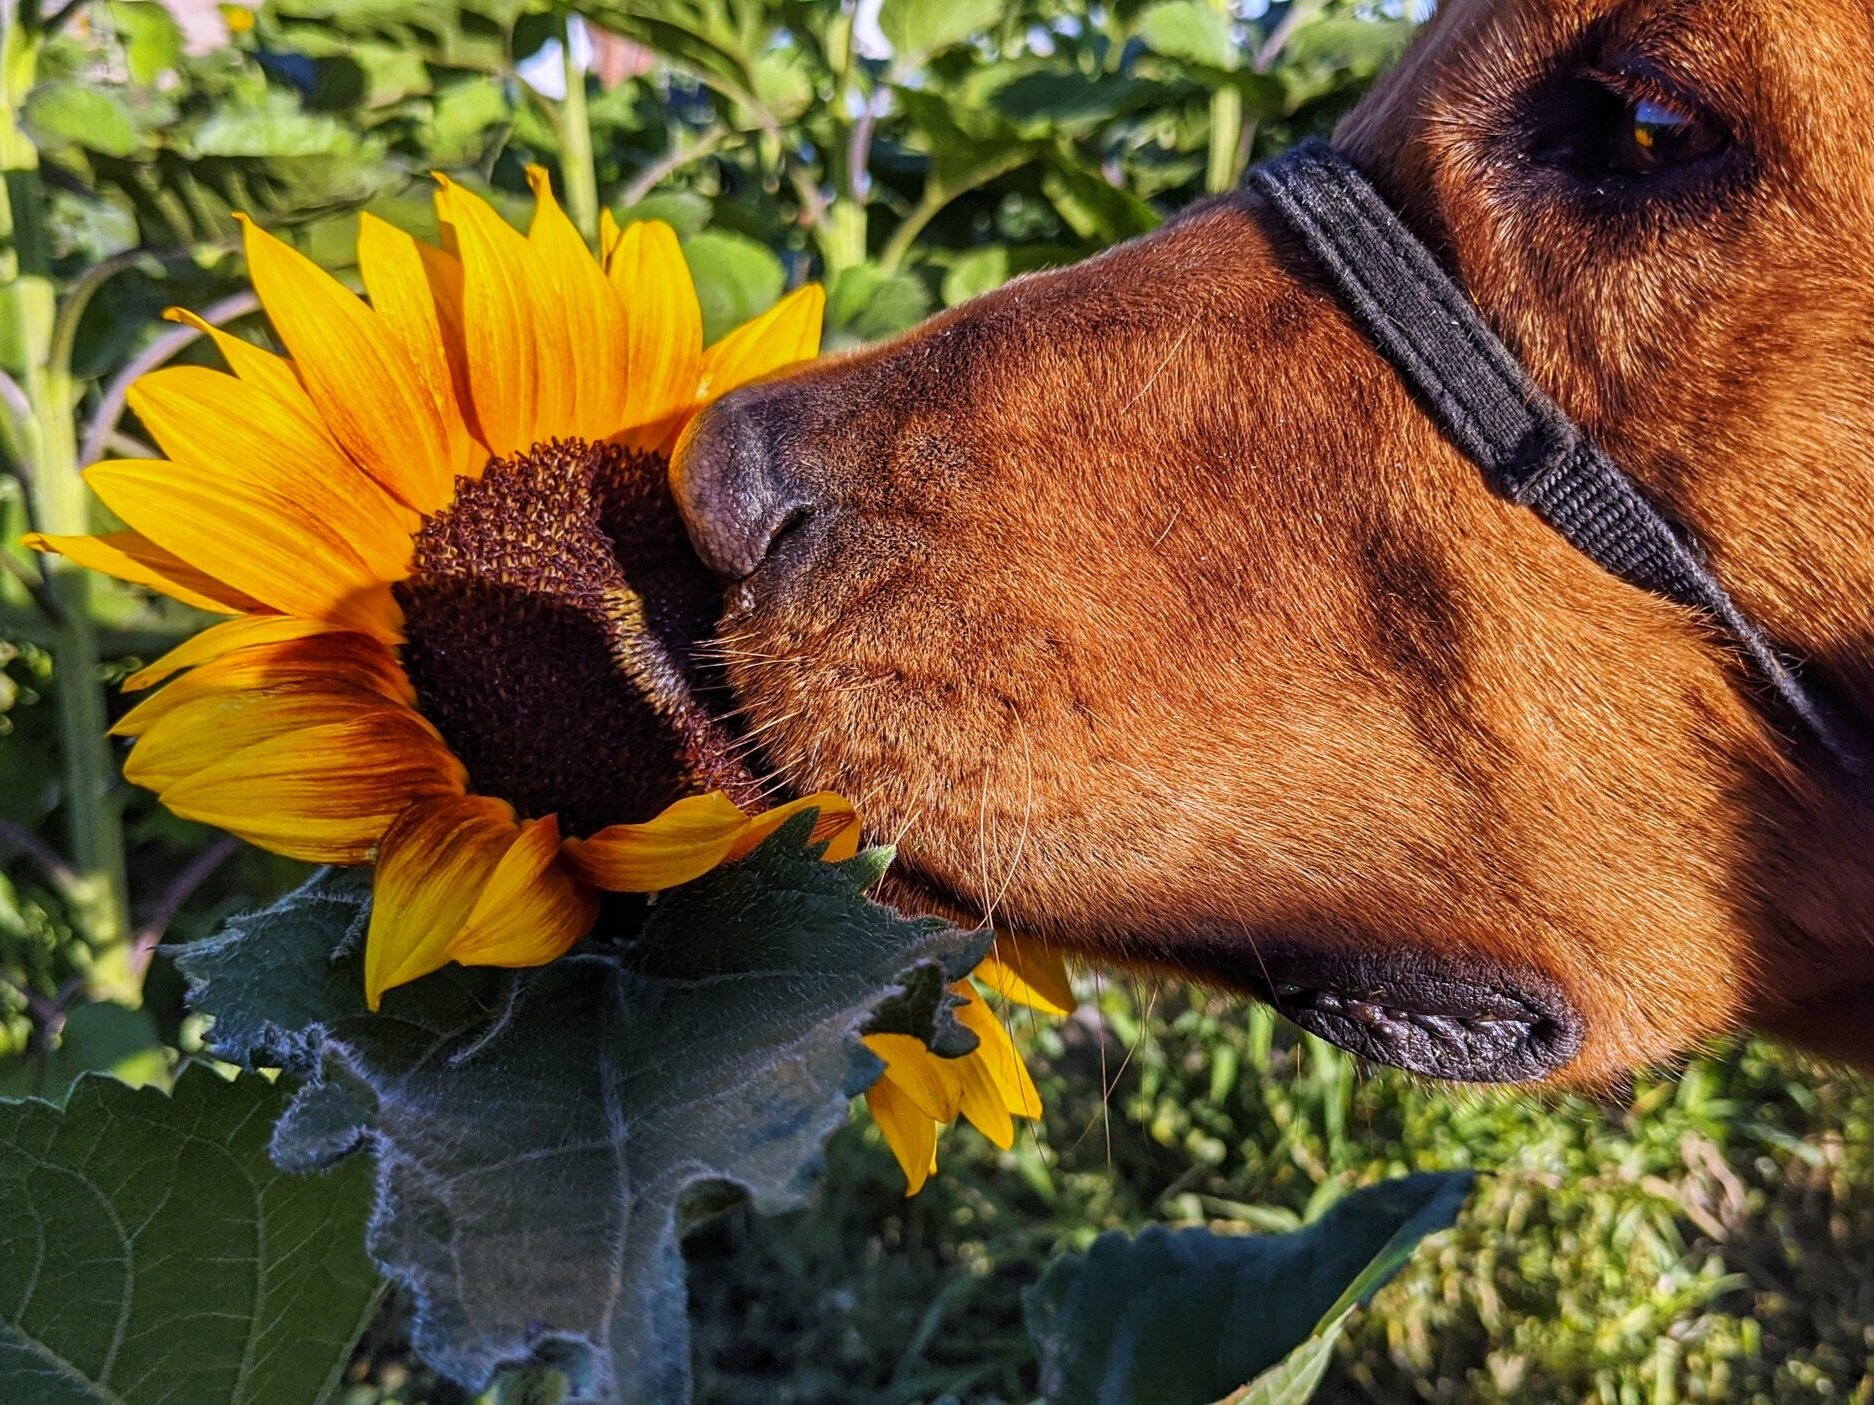 Scout sniffs a beautiful sunflower in a field.